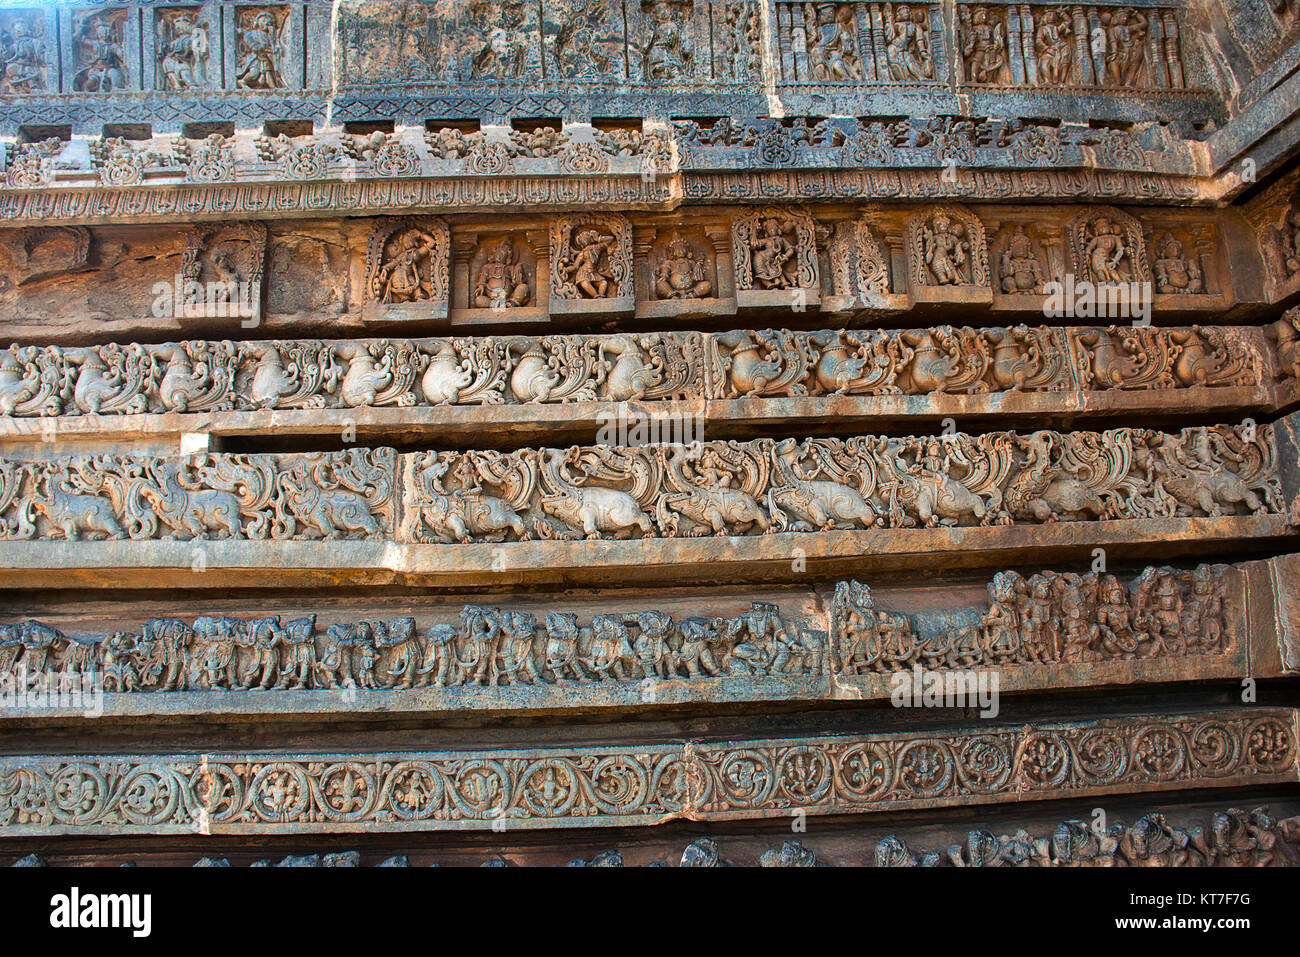 Reliefs on the outer wall. Hoysalesvara Temple, Halebid, Karnataka, 12th Century. Shiva temple Stock Photo